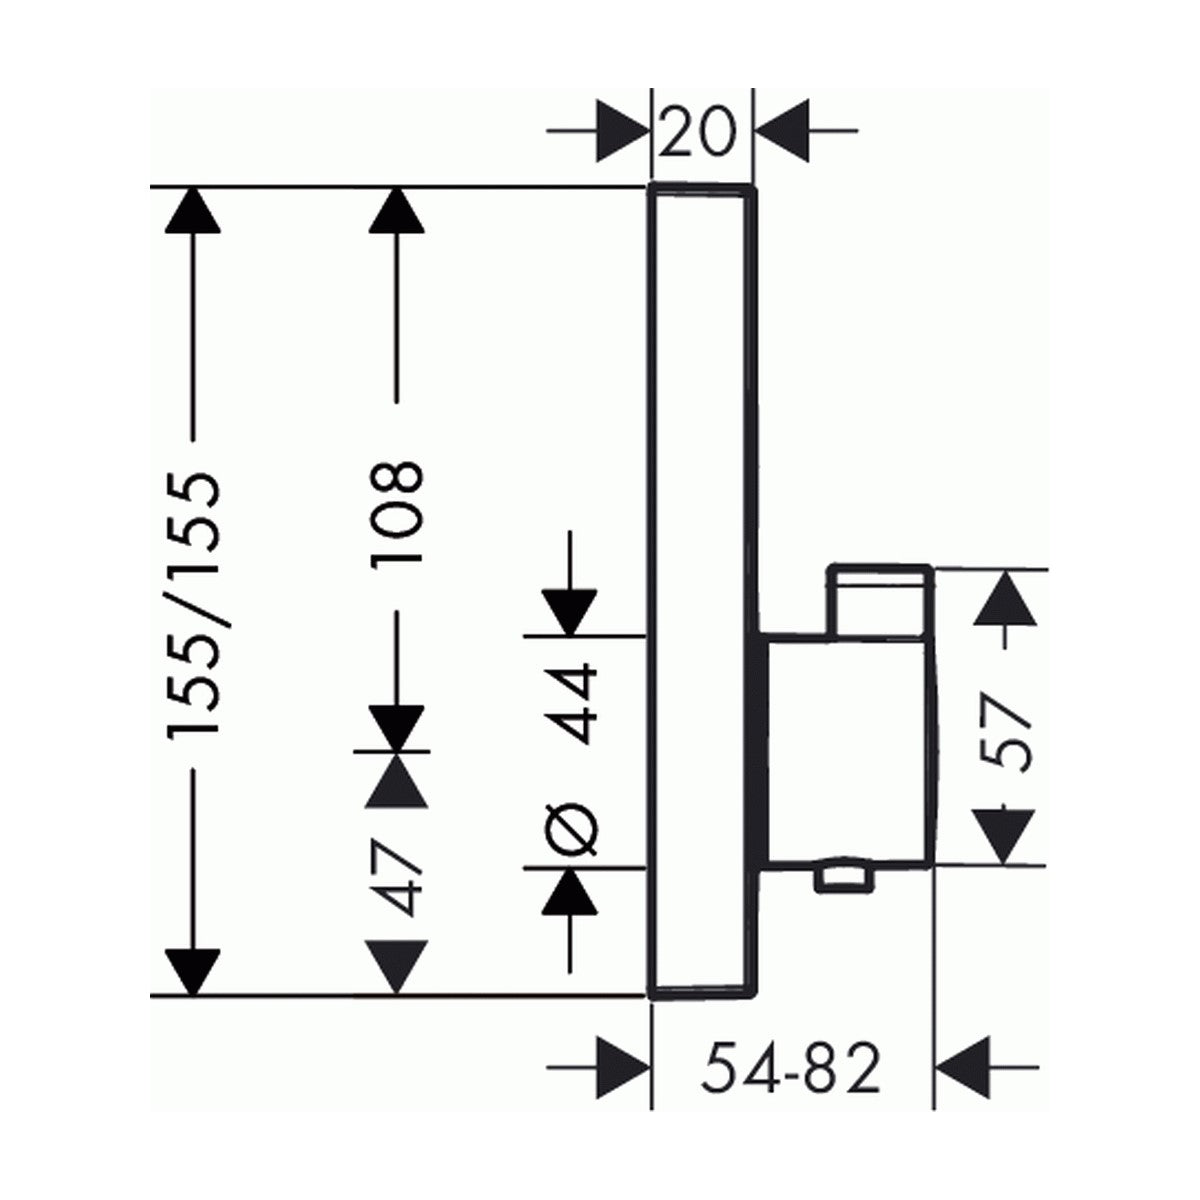 Armature 15763670 Hansgrohe Showerselect termostatska pokrivna plošča črna | KOPALNICA-ONLINE.SI